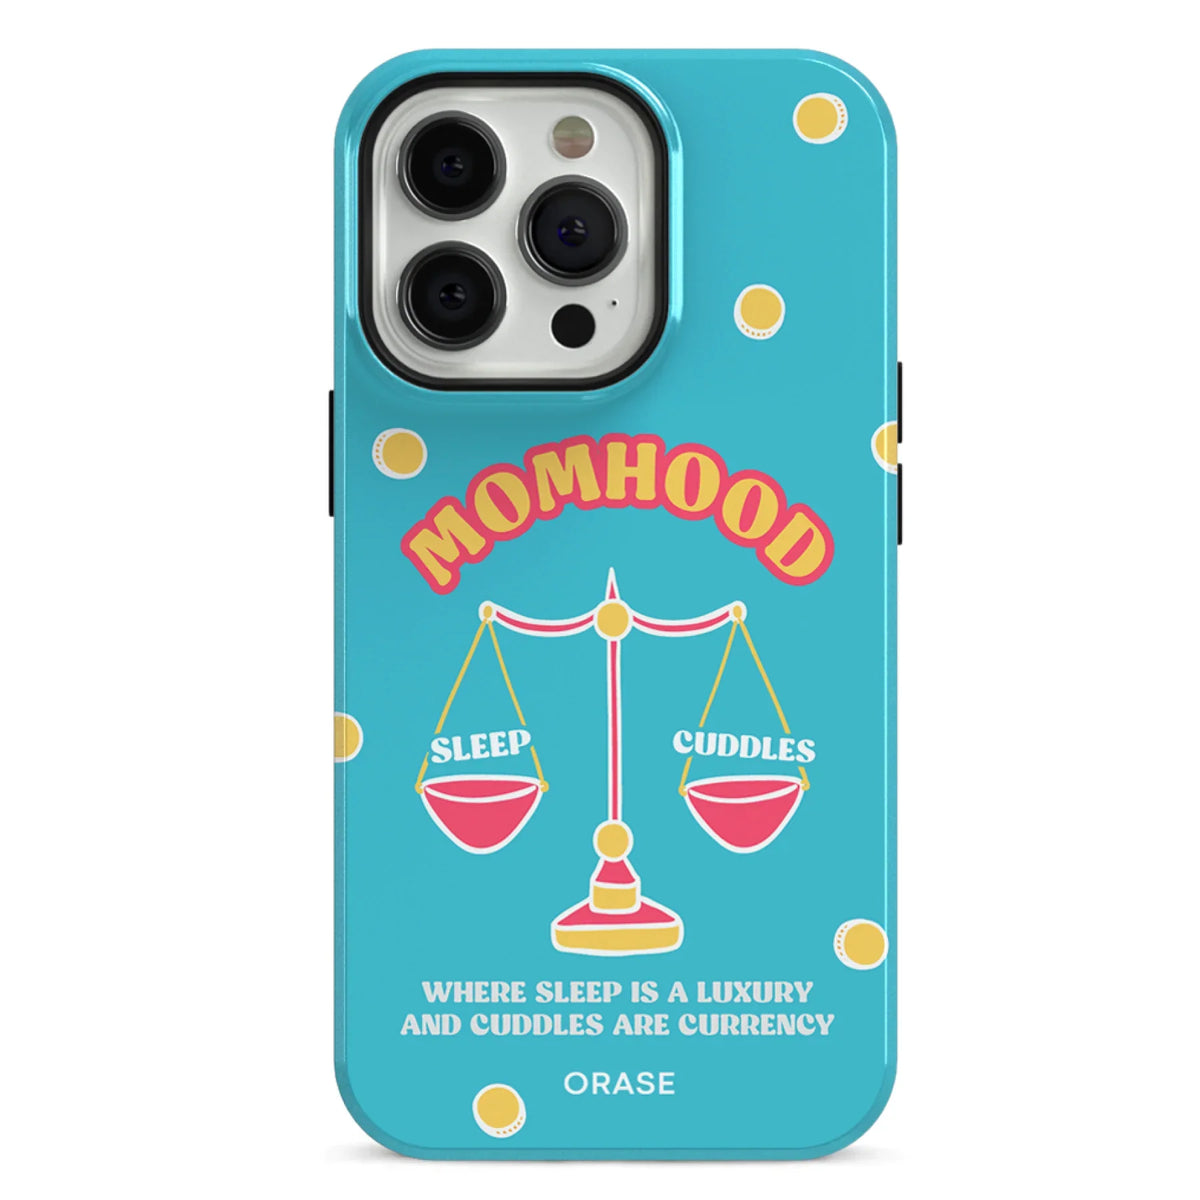 Momhood iPhone Case - iPhone 12 Pro